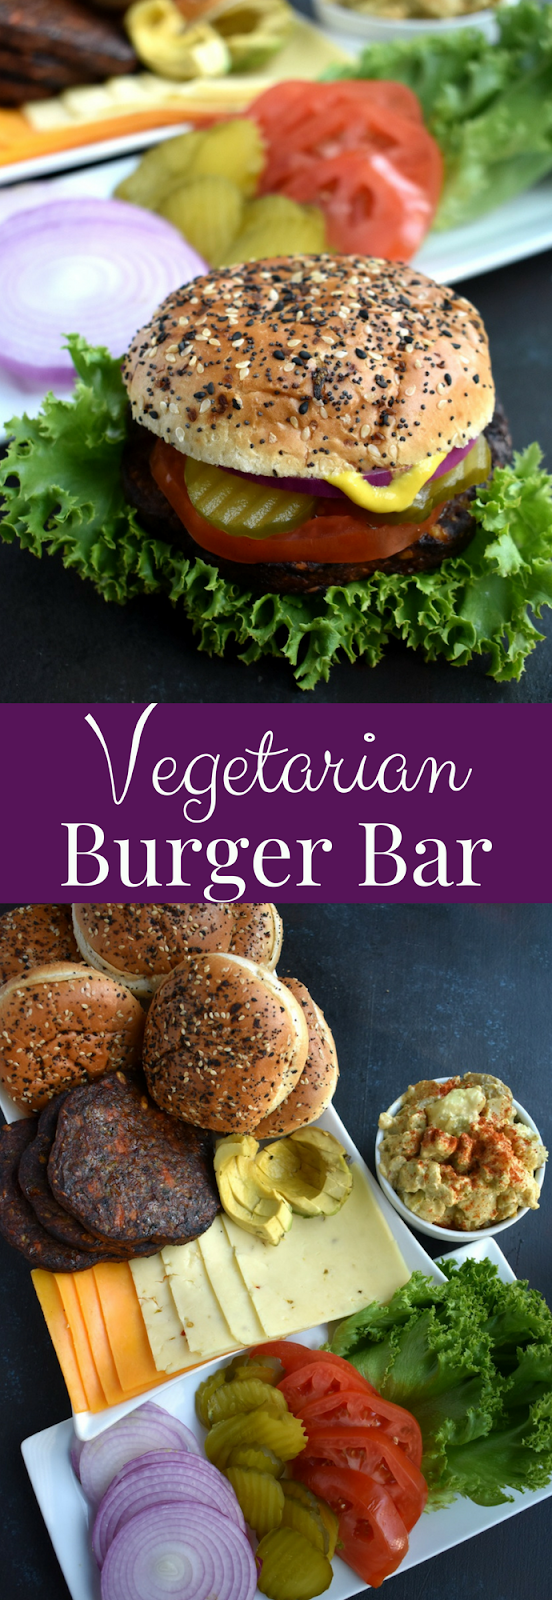 Vegetarian Burger Bar | The Nutritionist Reviews